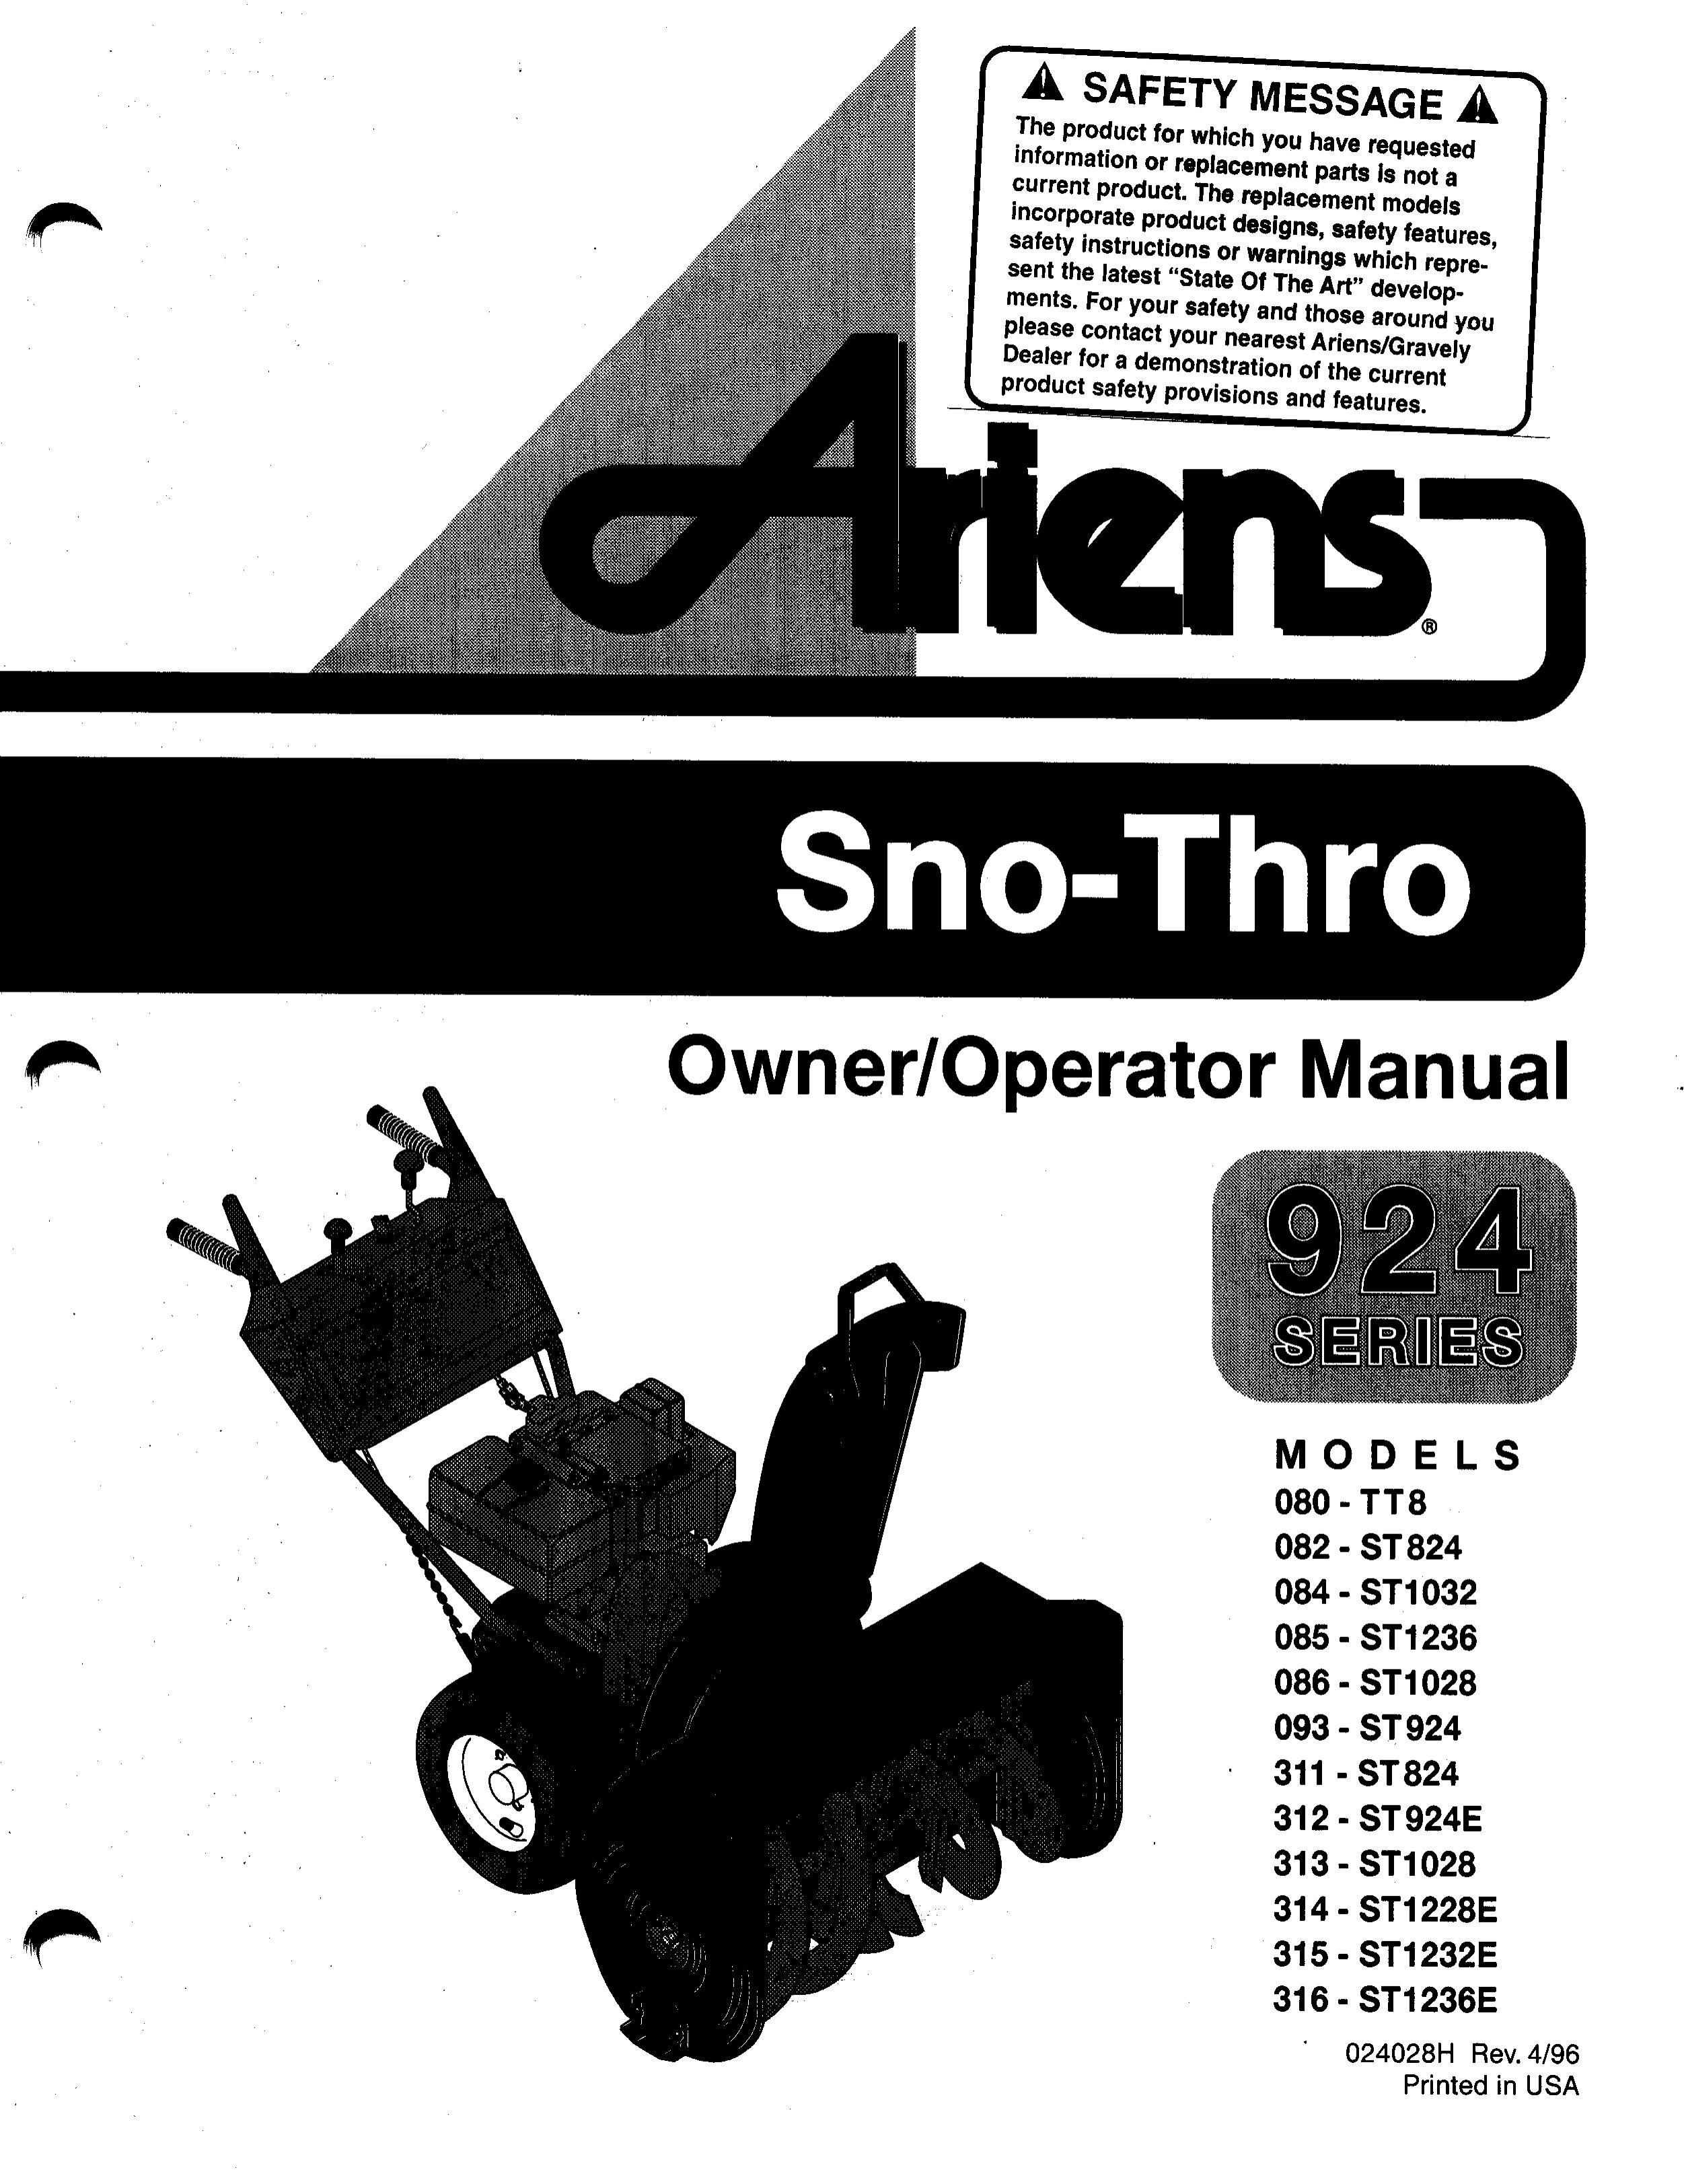 Ariens 084-ST1032 Snow Blower User Manual